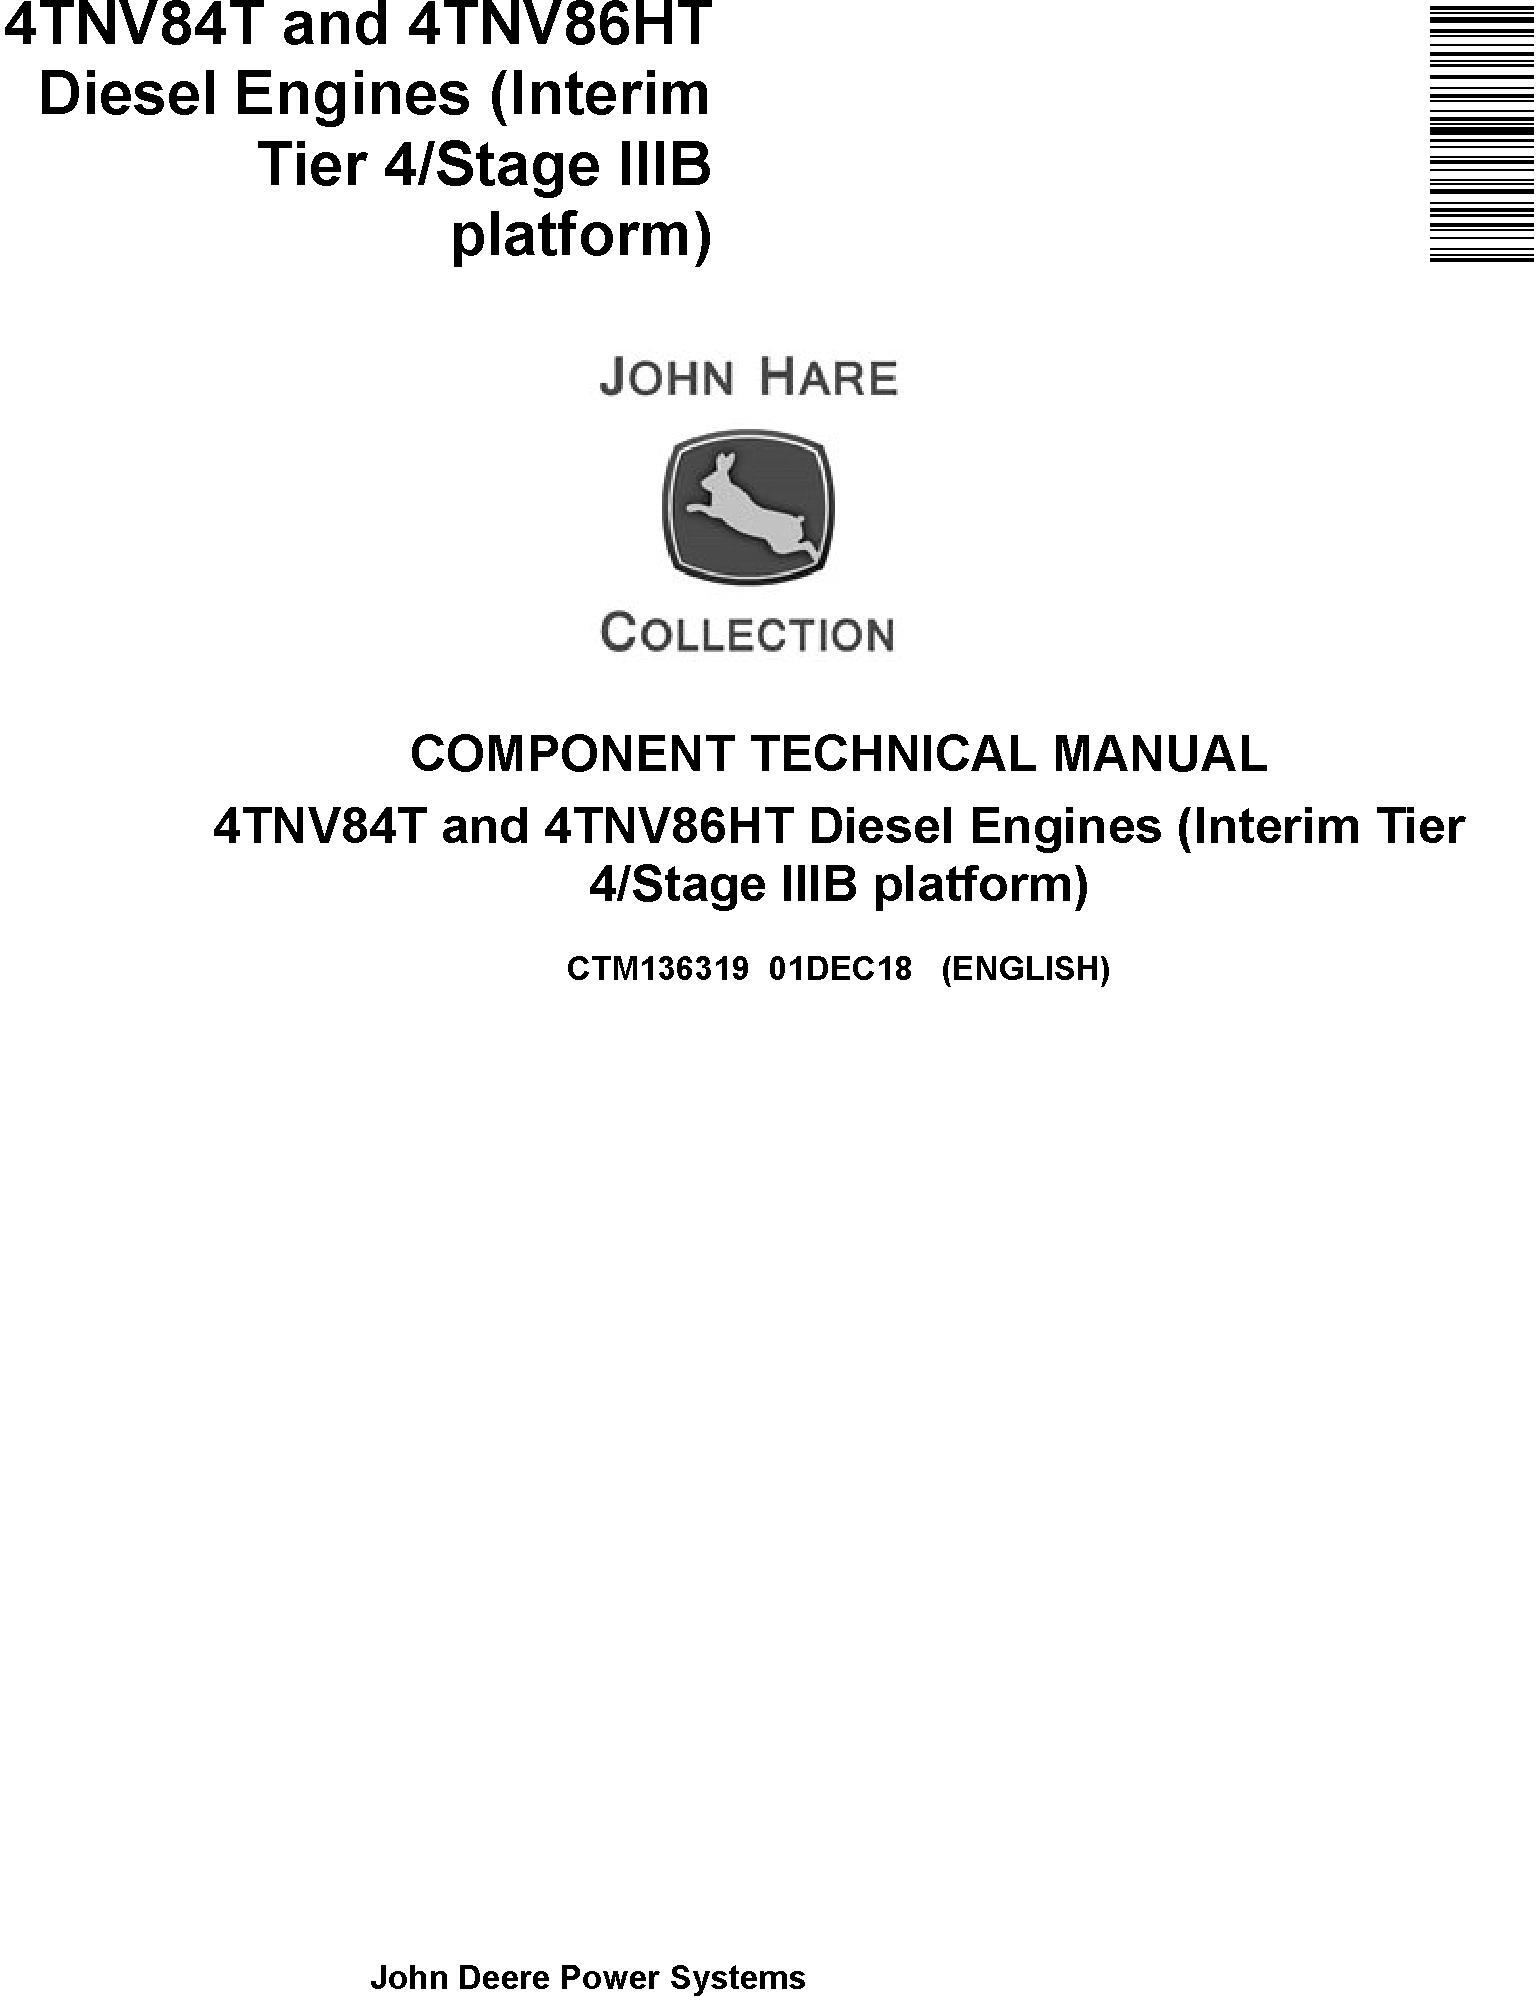 John Deere 4TNV84T 4TNV86HT IT4 Stage IIIB Yanmar Diesel Engine Component Technical Manual CTM136319